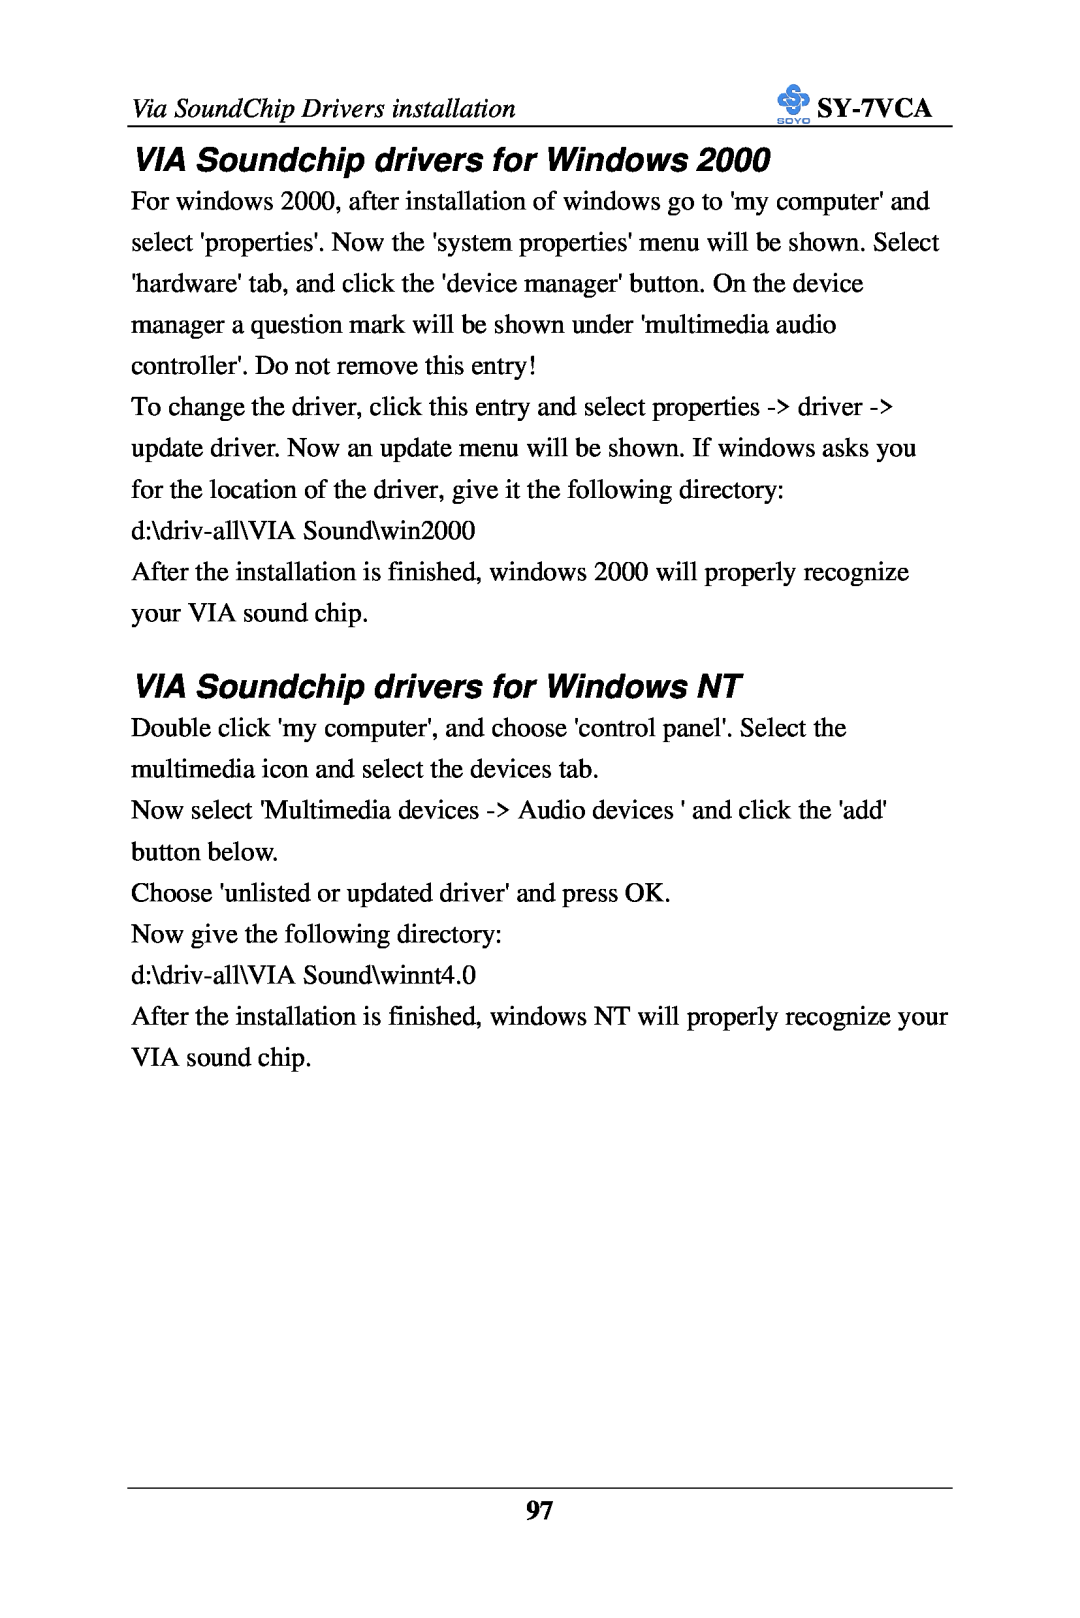 SOYO SY-7VCA user manual VIA Soundchip drivers for Windows NT 